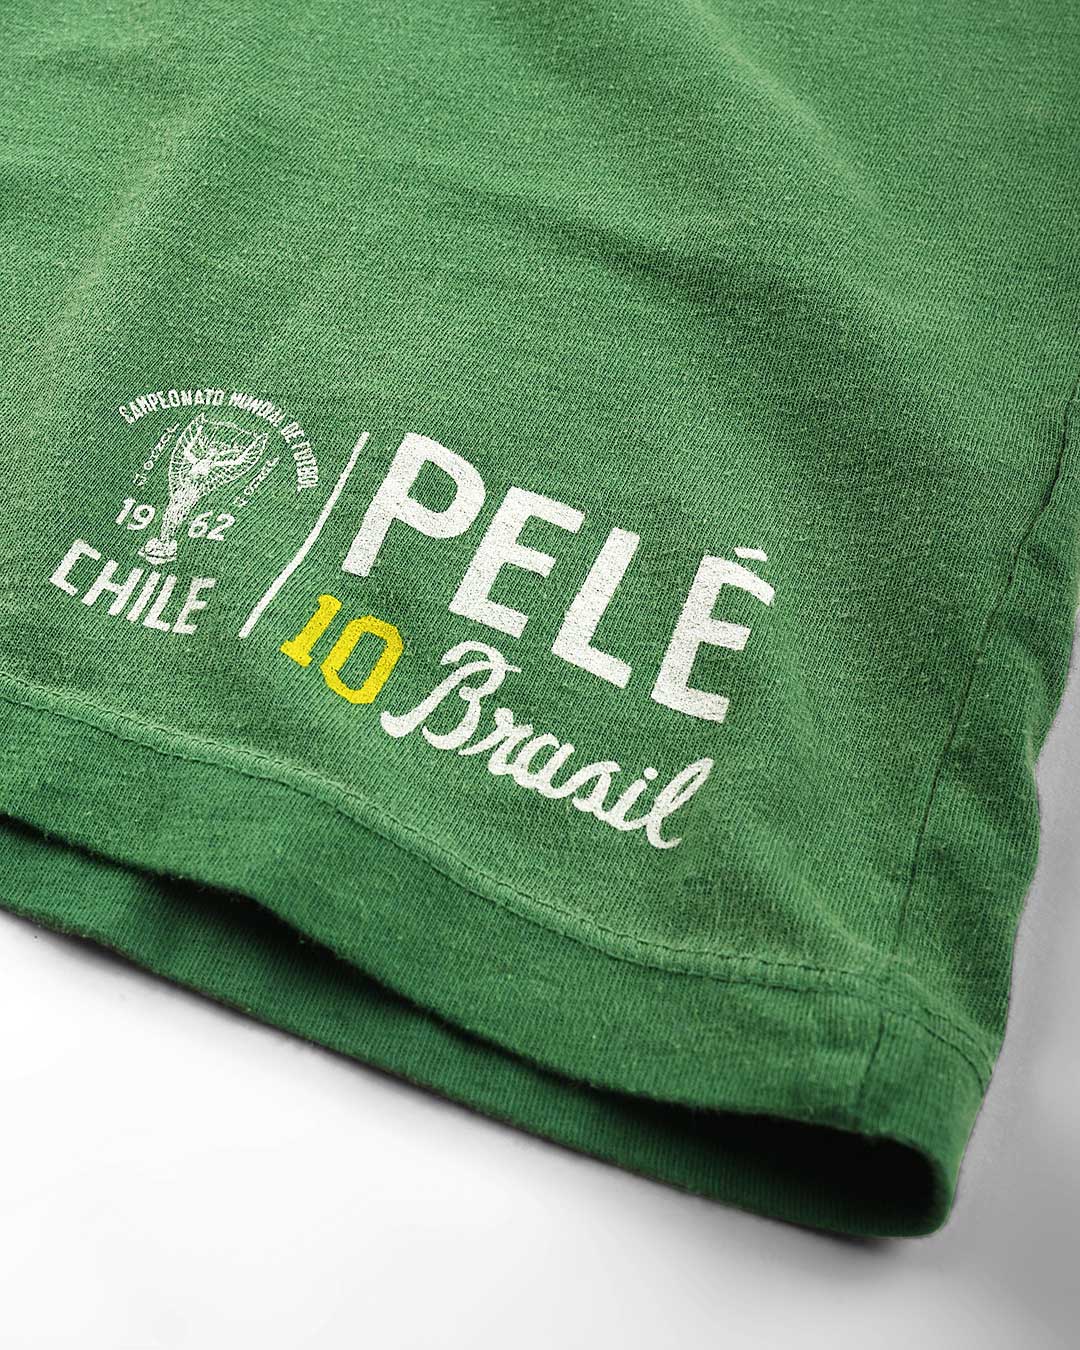 Pelé 1962 Brasil Green Tee - Roots of Fight